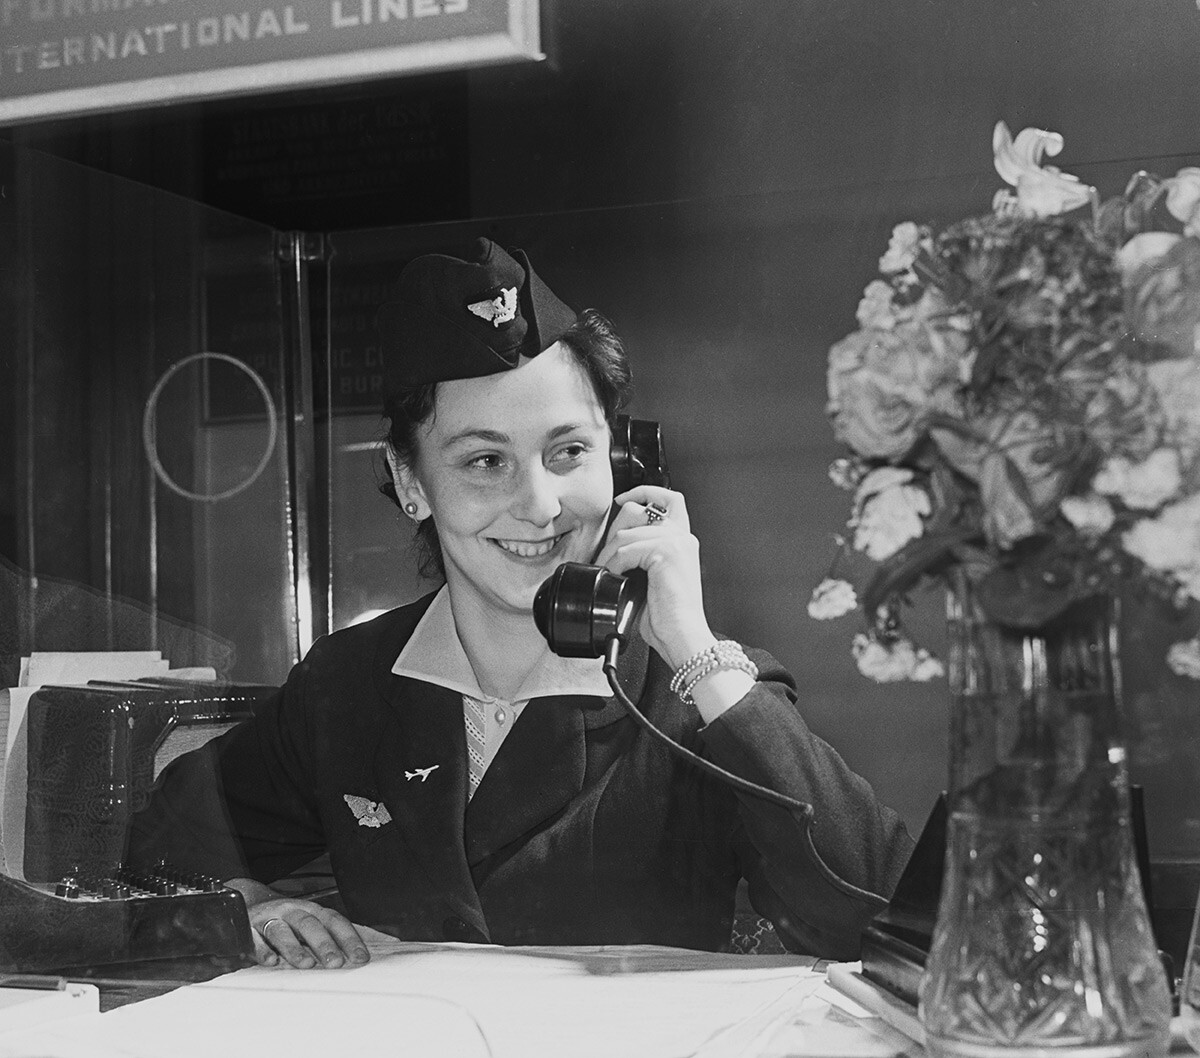 USSR. July 1, 1958. An employee of Aeroflot answers a phone call.